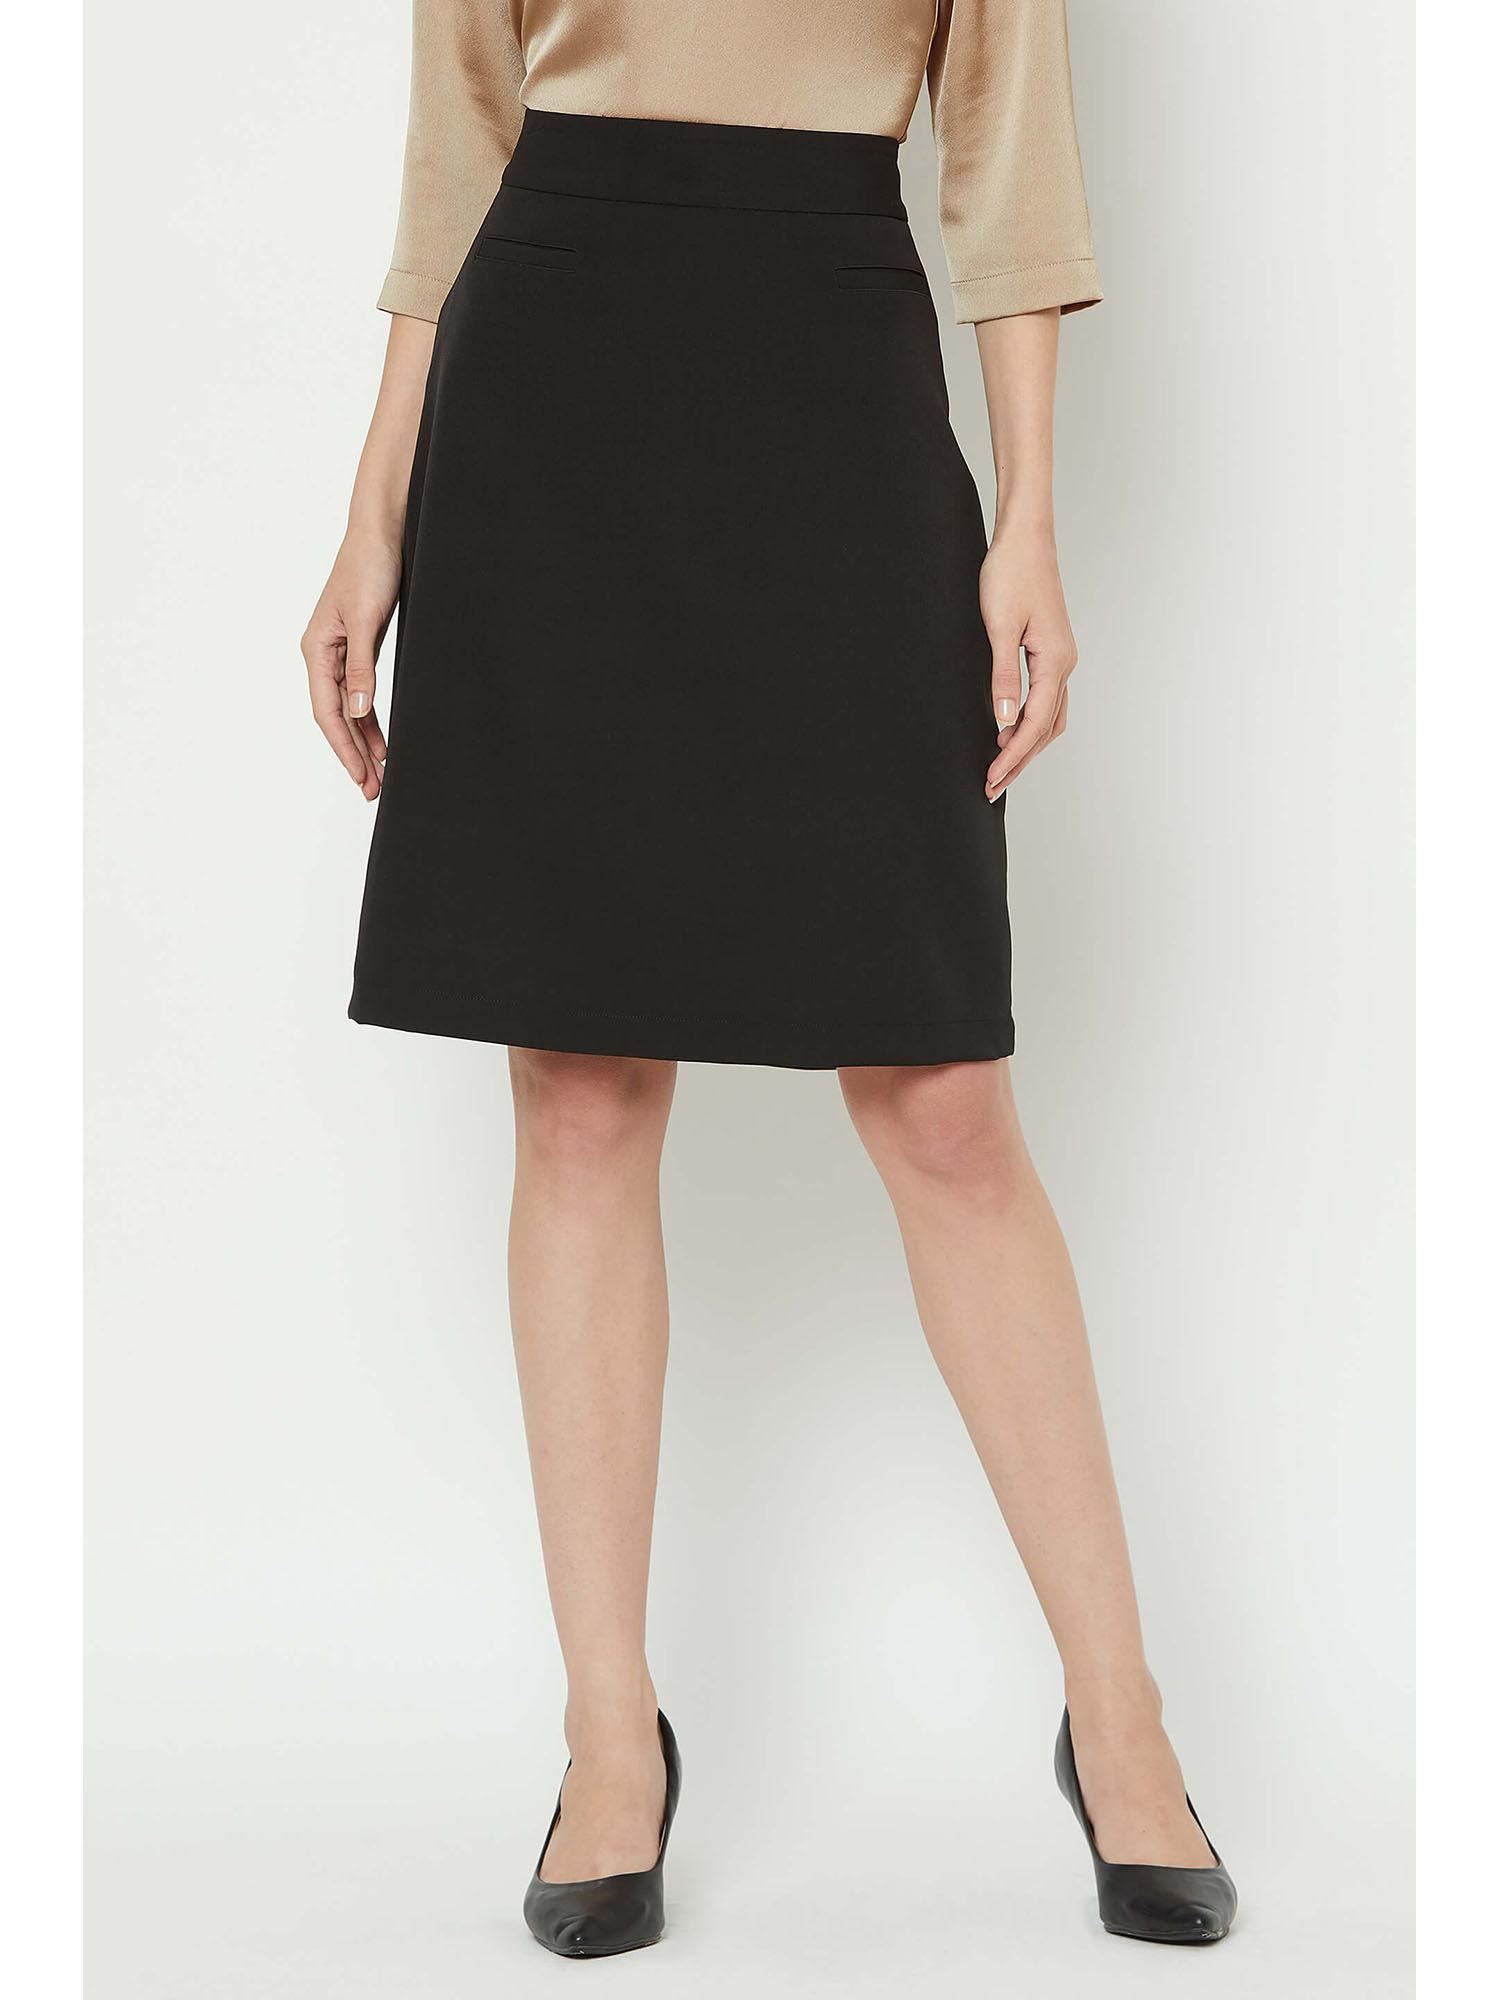 black a-line skirt